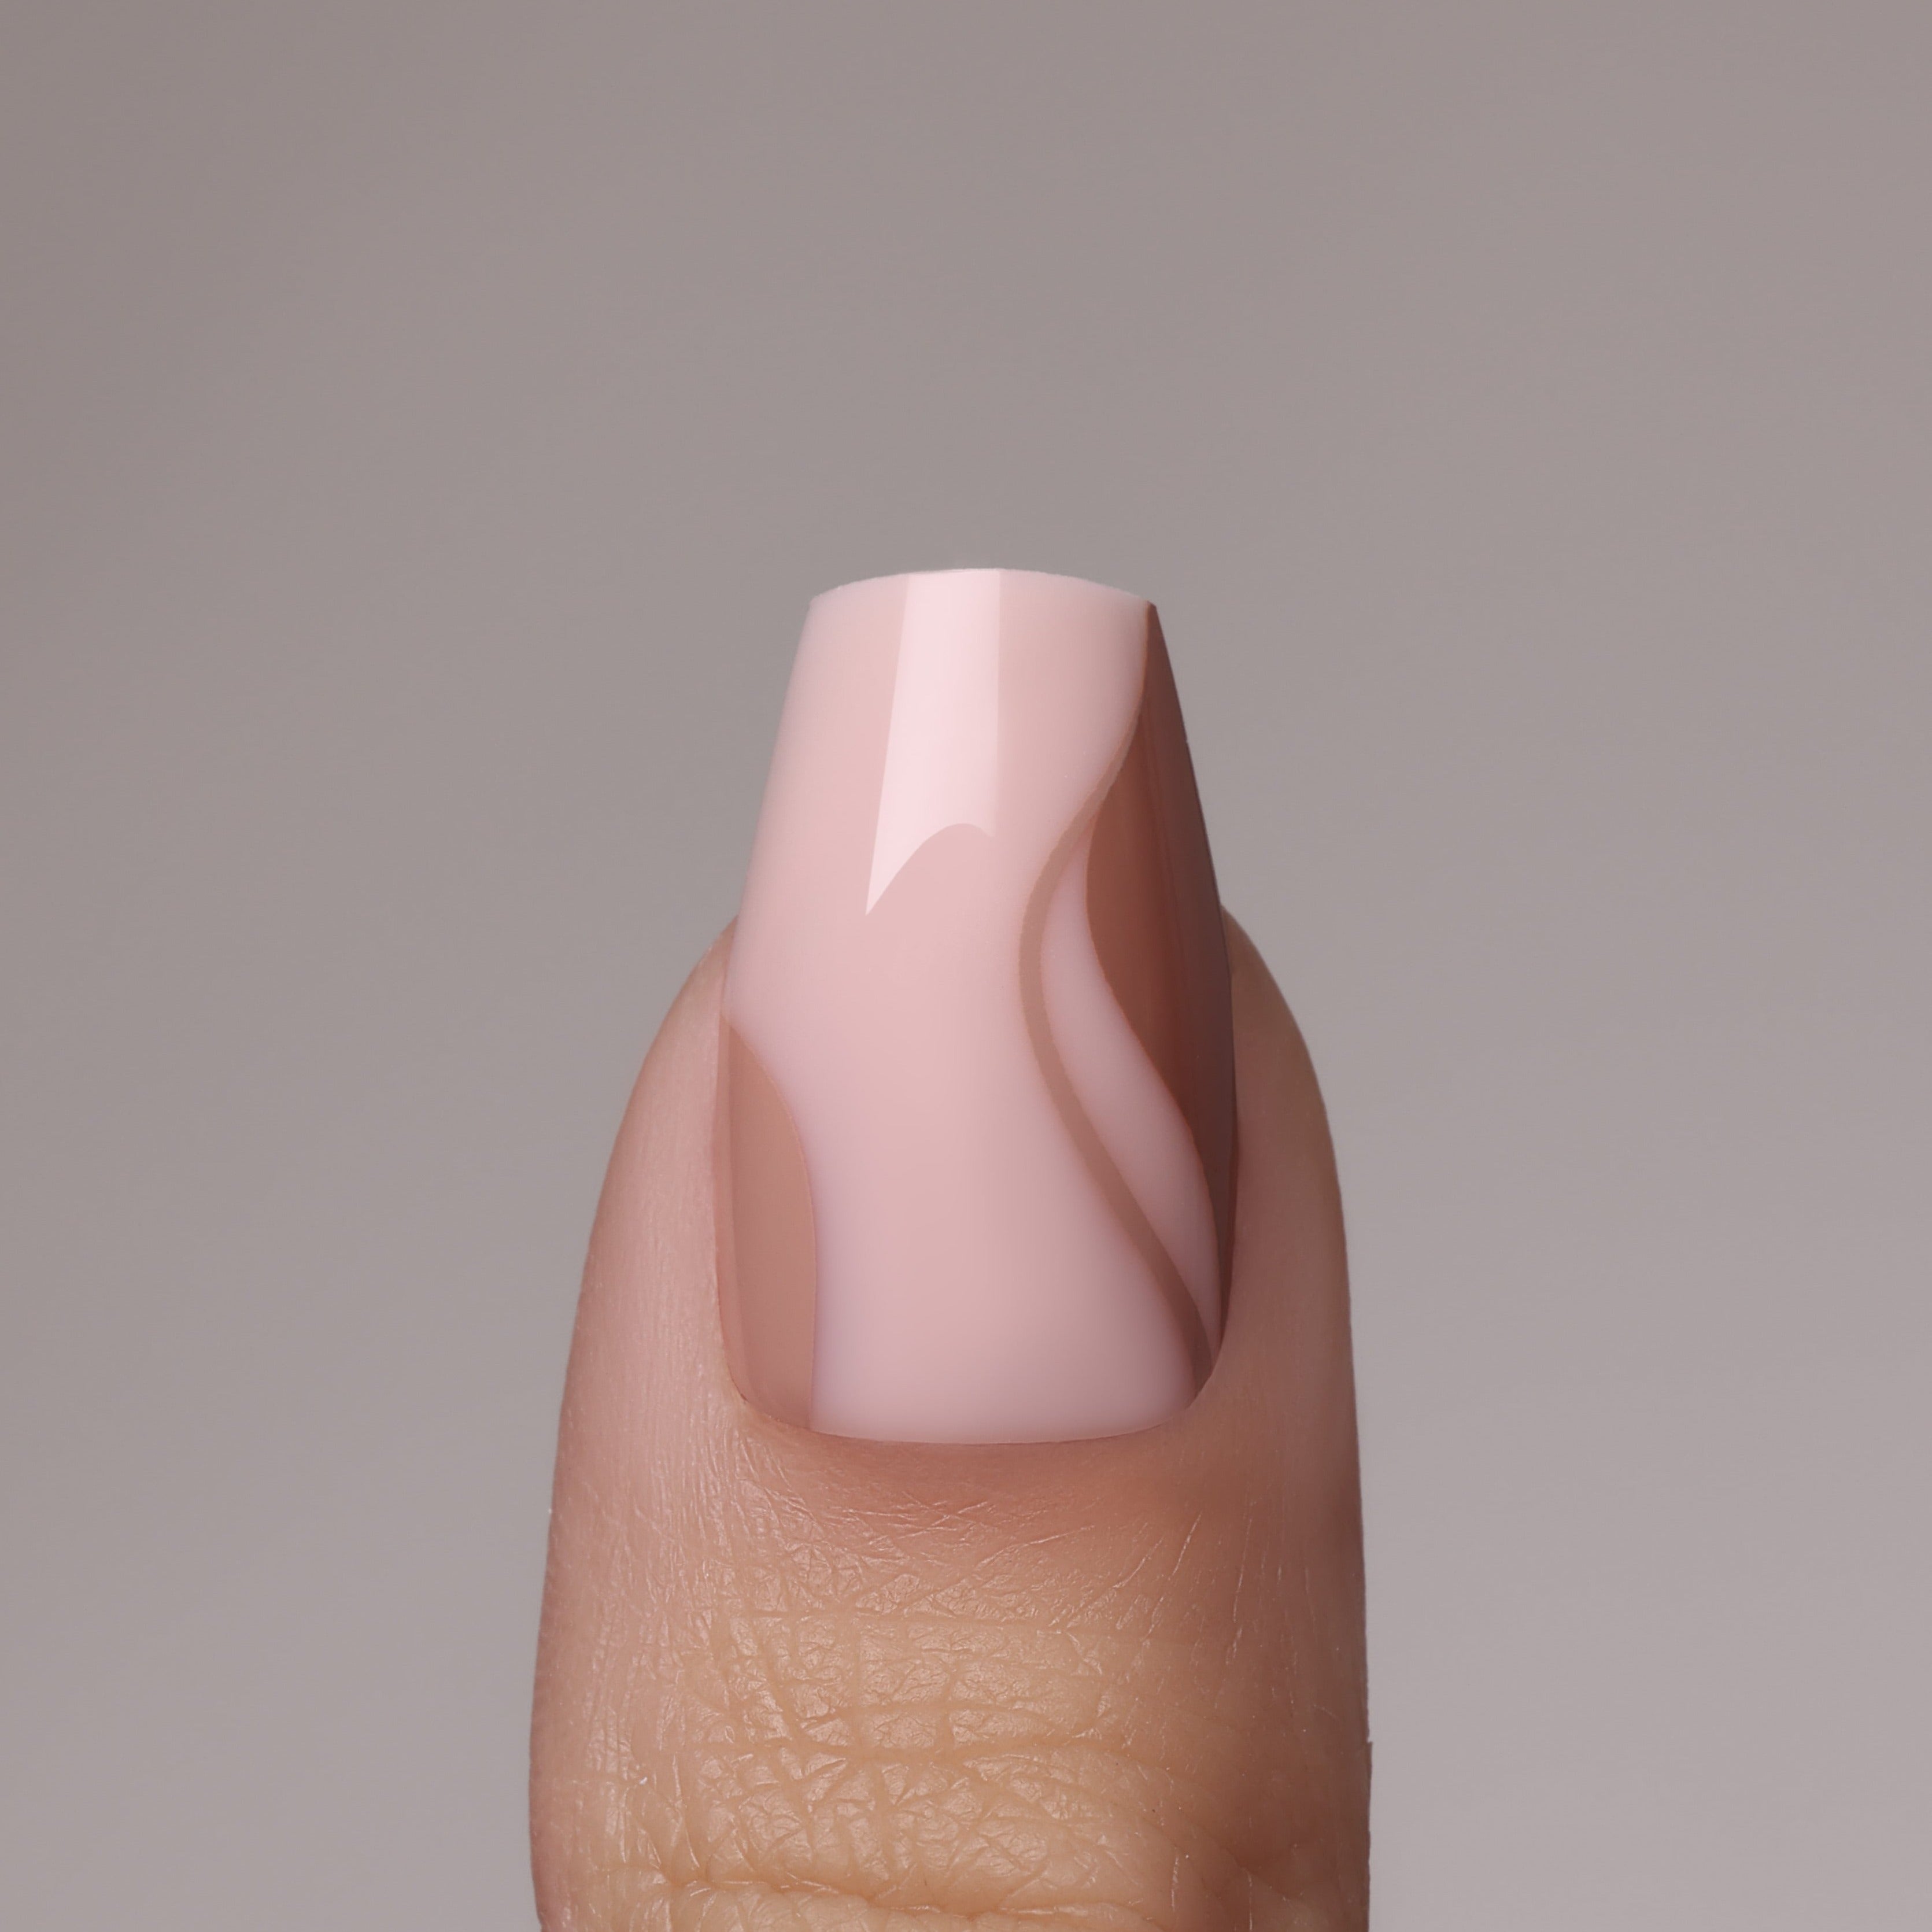 SIENA ROSE ACRYLISH (long) artificial nails